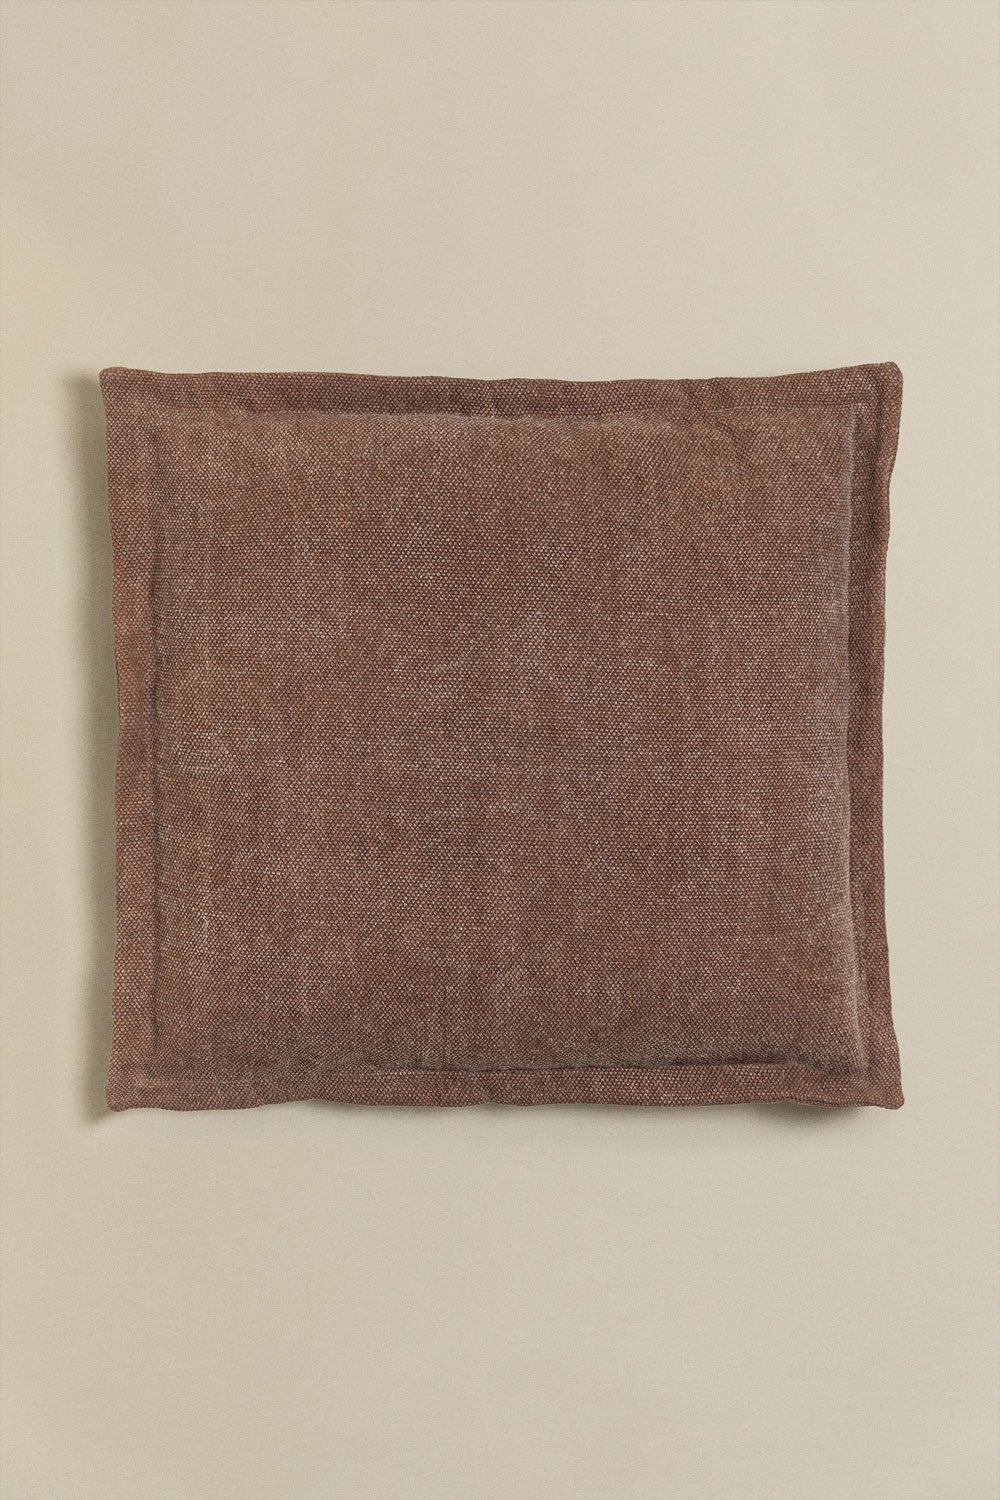 Square Cotton Cushion (60x60 cm) Karzem, gallery image 1